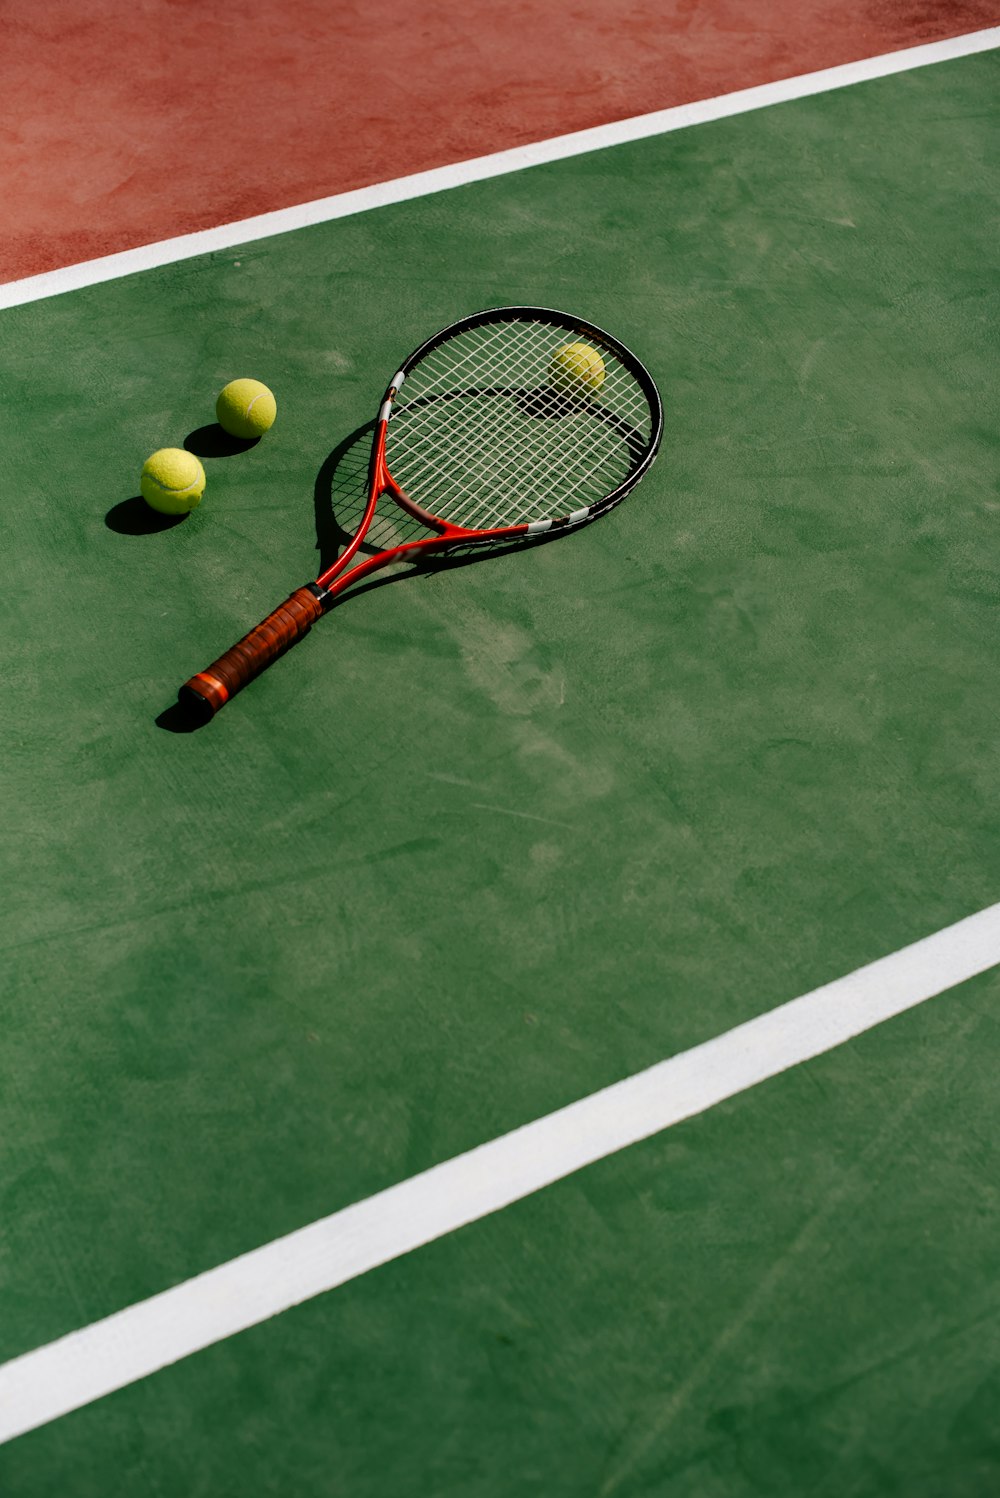 a tennis racket and three tennis balls on a court